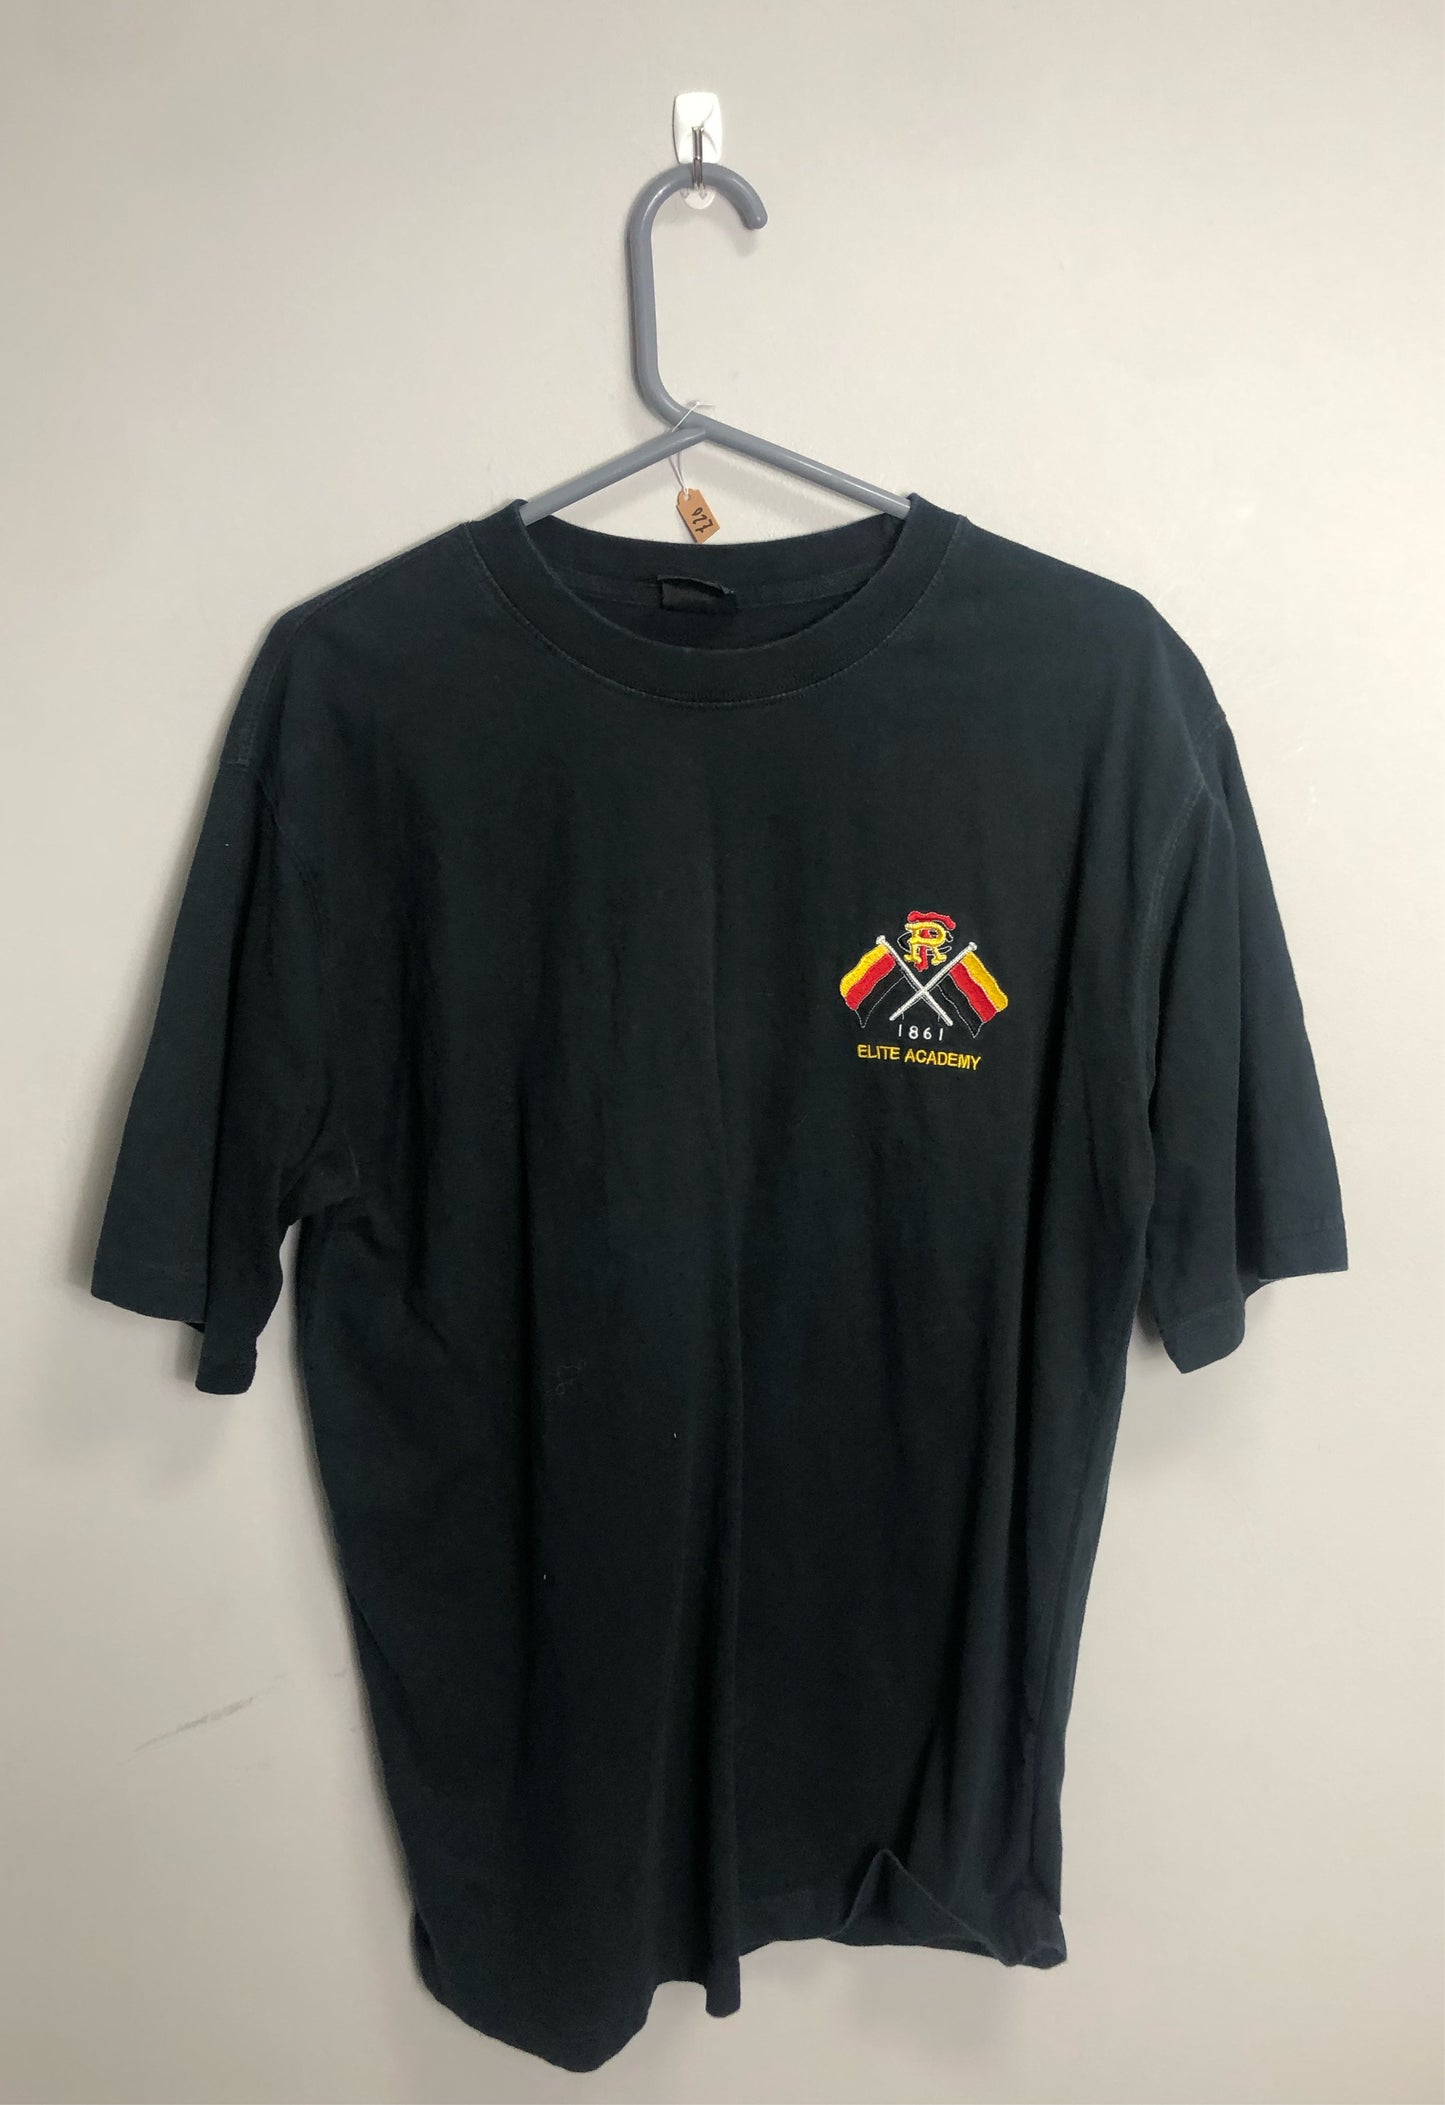 Richmond Elite Academy Tee Shirt - Large - 40” Chest